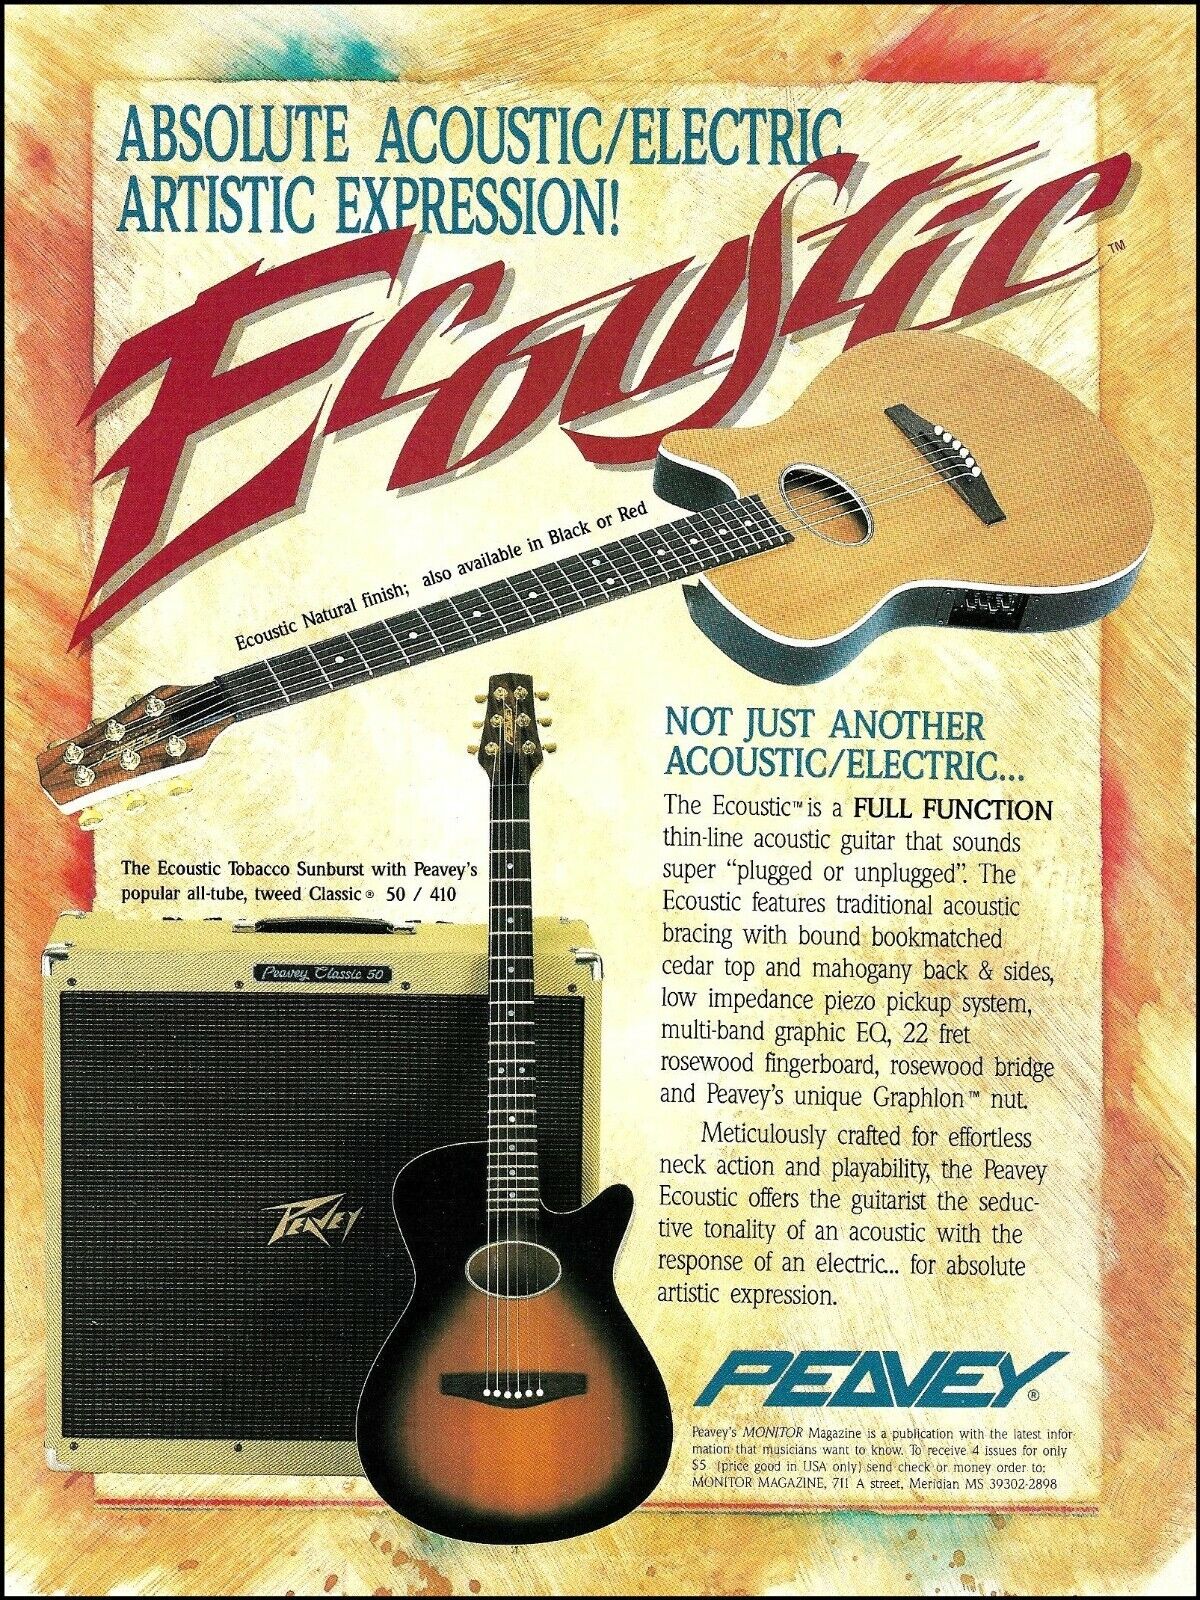 Peavey Ecoustic Series Acoustic/Electric Guitar Classic 50/410 amp advertisement